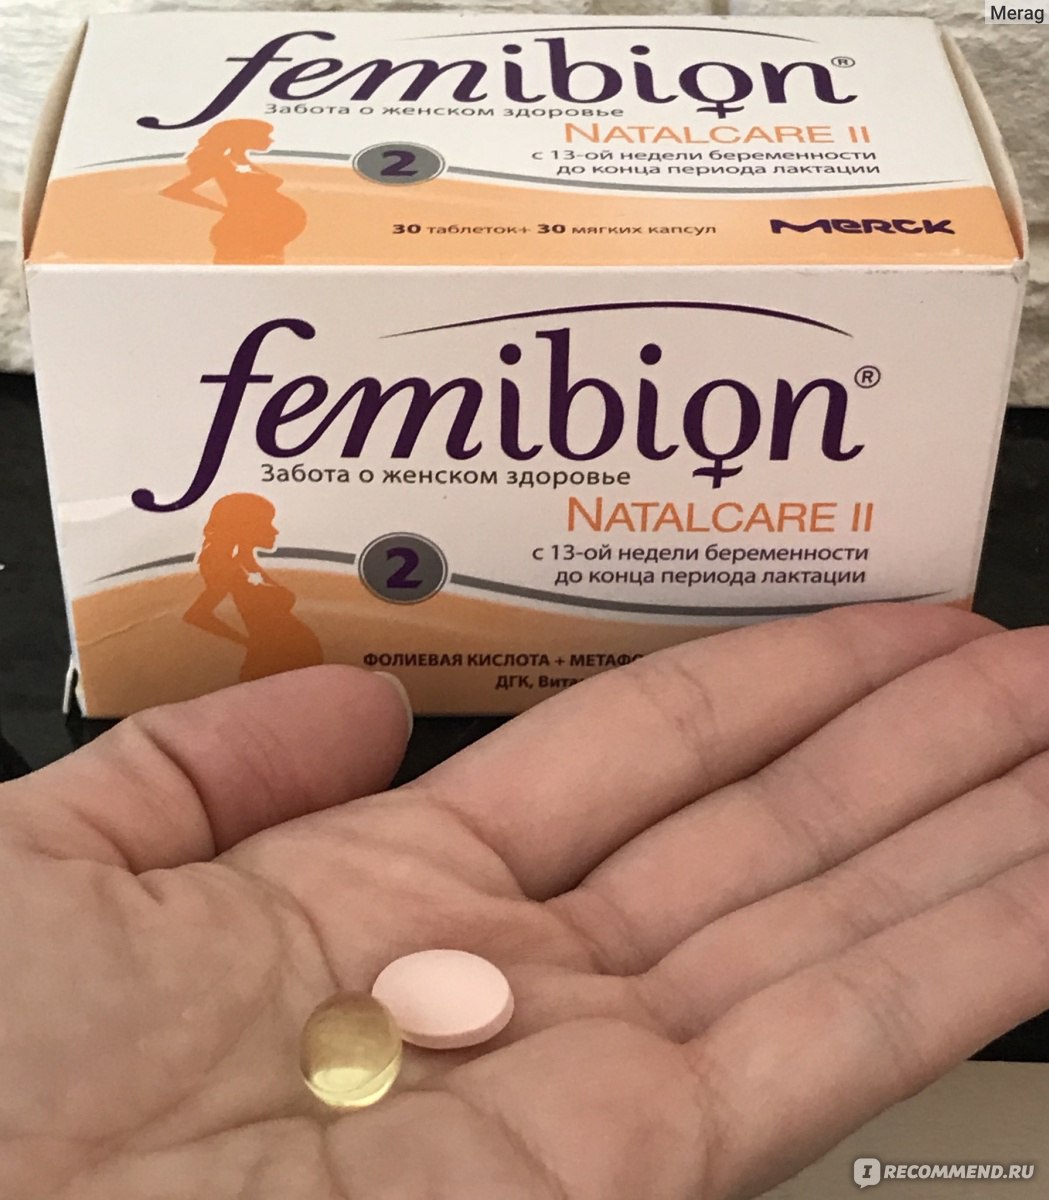 Как пить фемибион 2. Витамины Femibion 2. Femibion natalcare II. Фемибион 2 для беременных. Фемибион 2 капсулы.